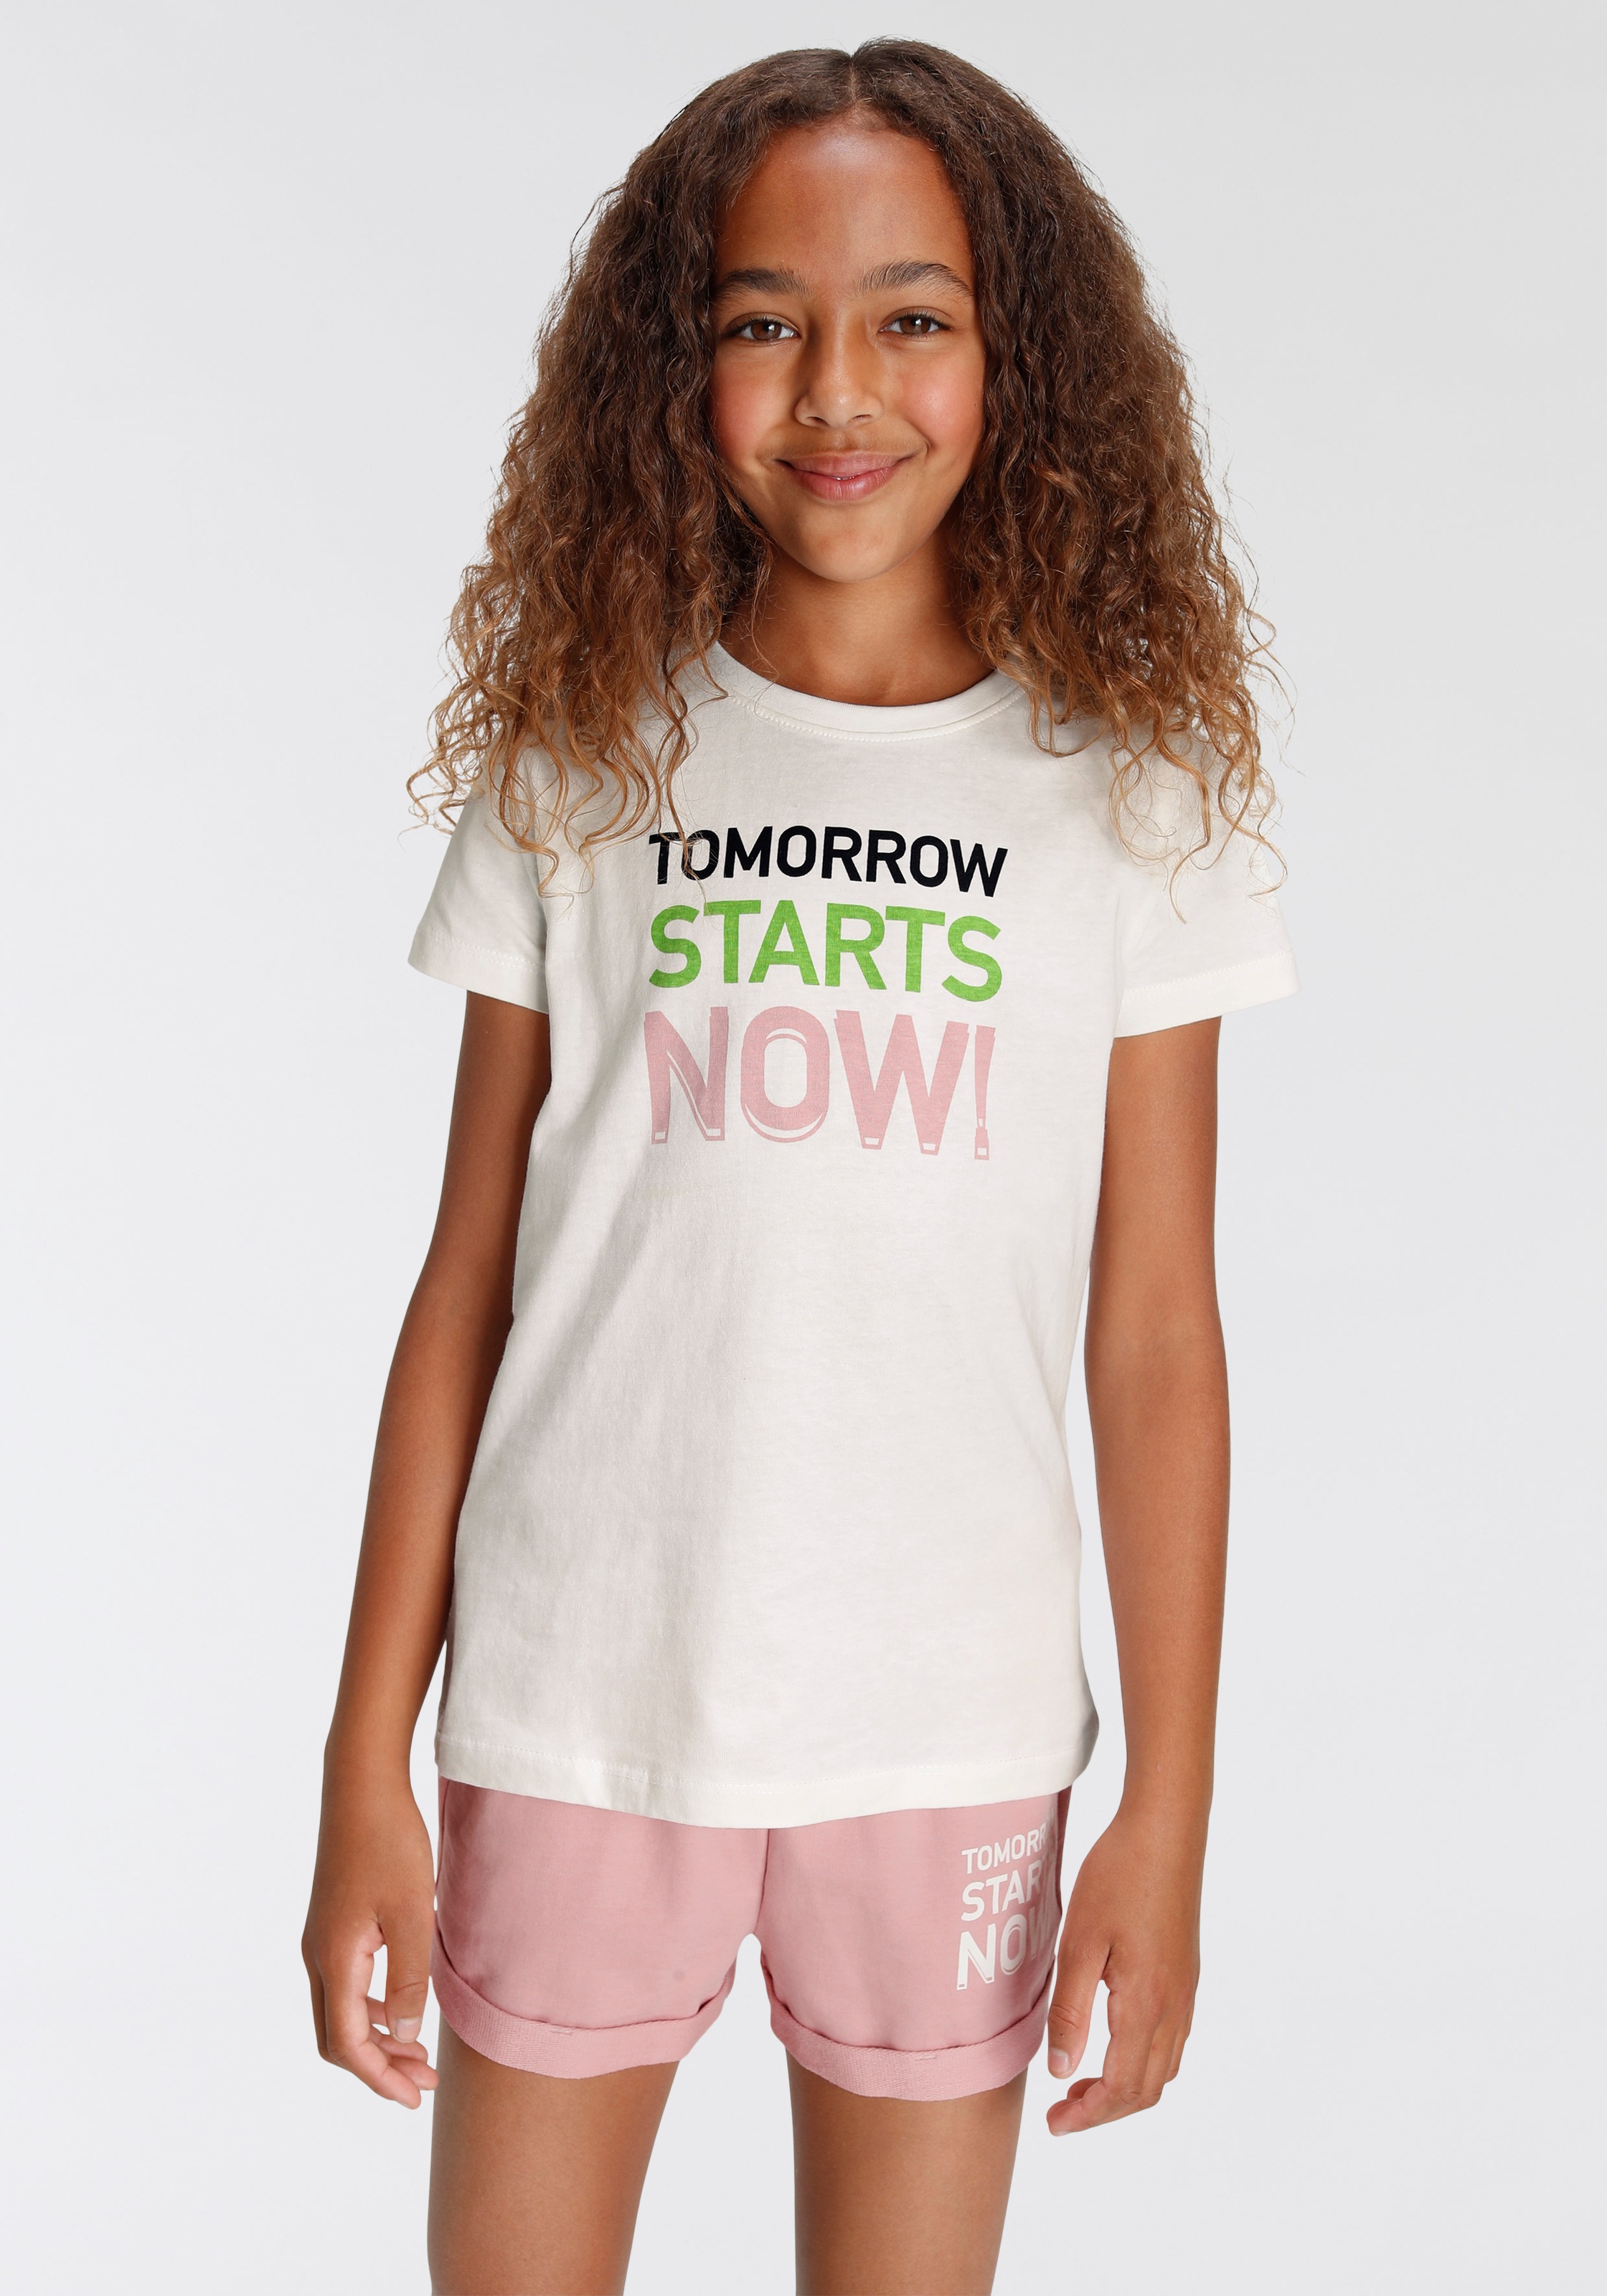 T-Shirt Druck now!«, KIDSWORLD %Sale »Tomorrow im starts jetzt